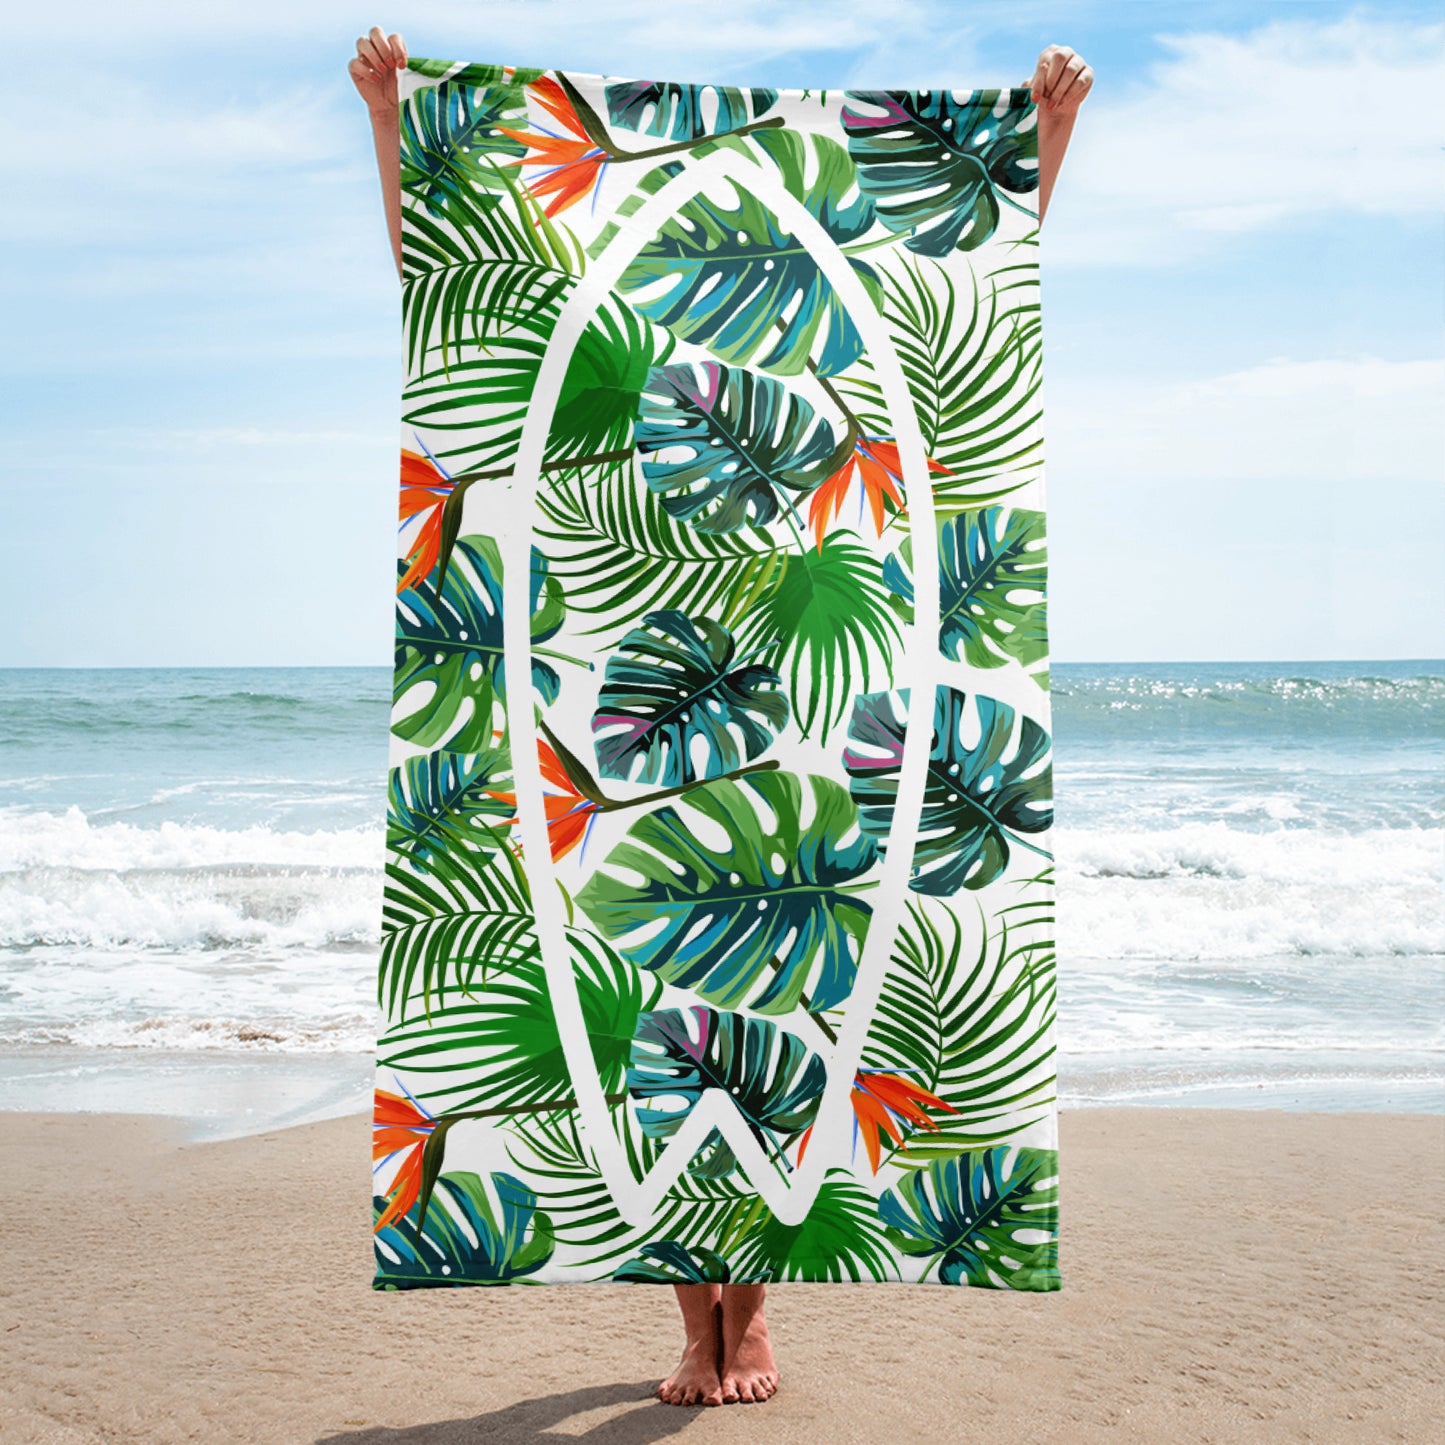 Surf Pop-up Trainer Beach Towel - Lush green